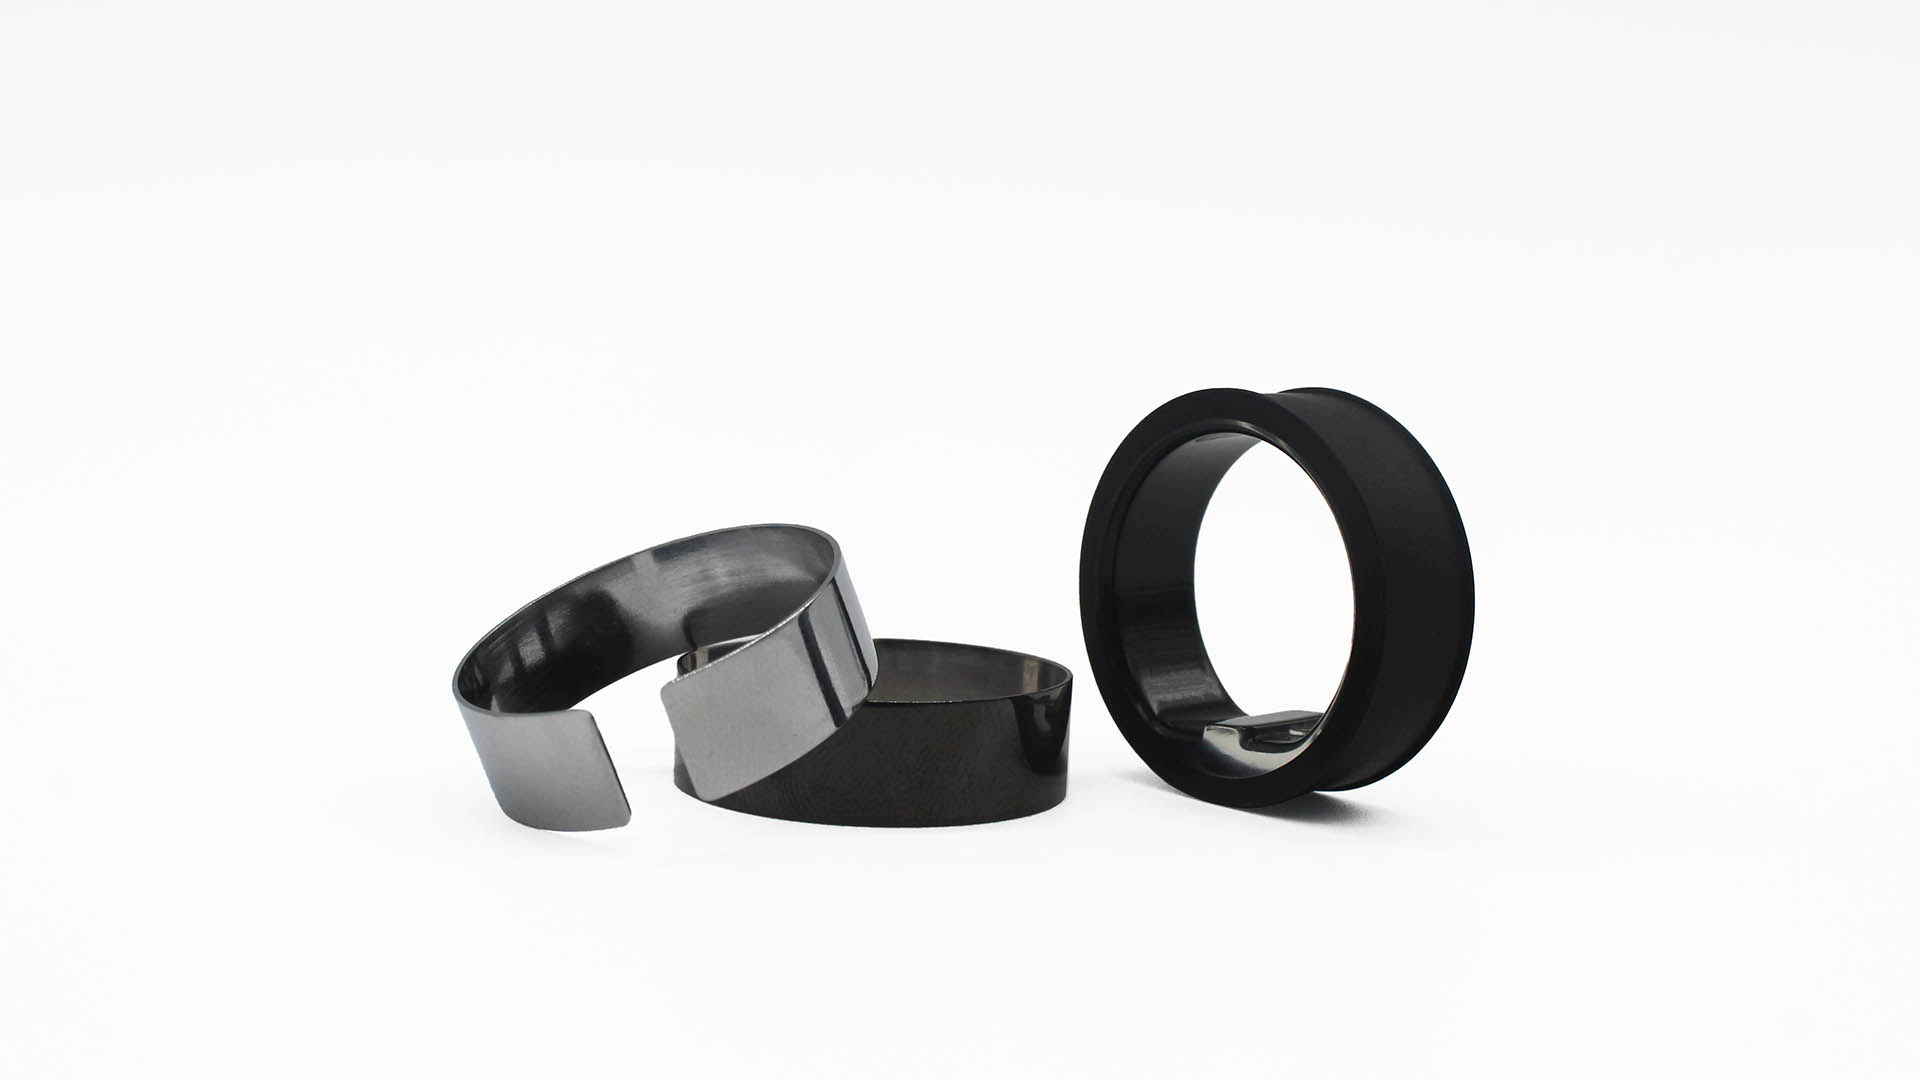 NFC Smart-Ring - Future Project Management LLC